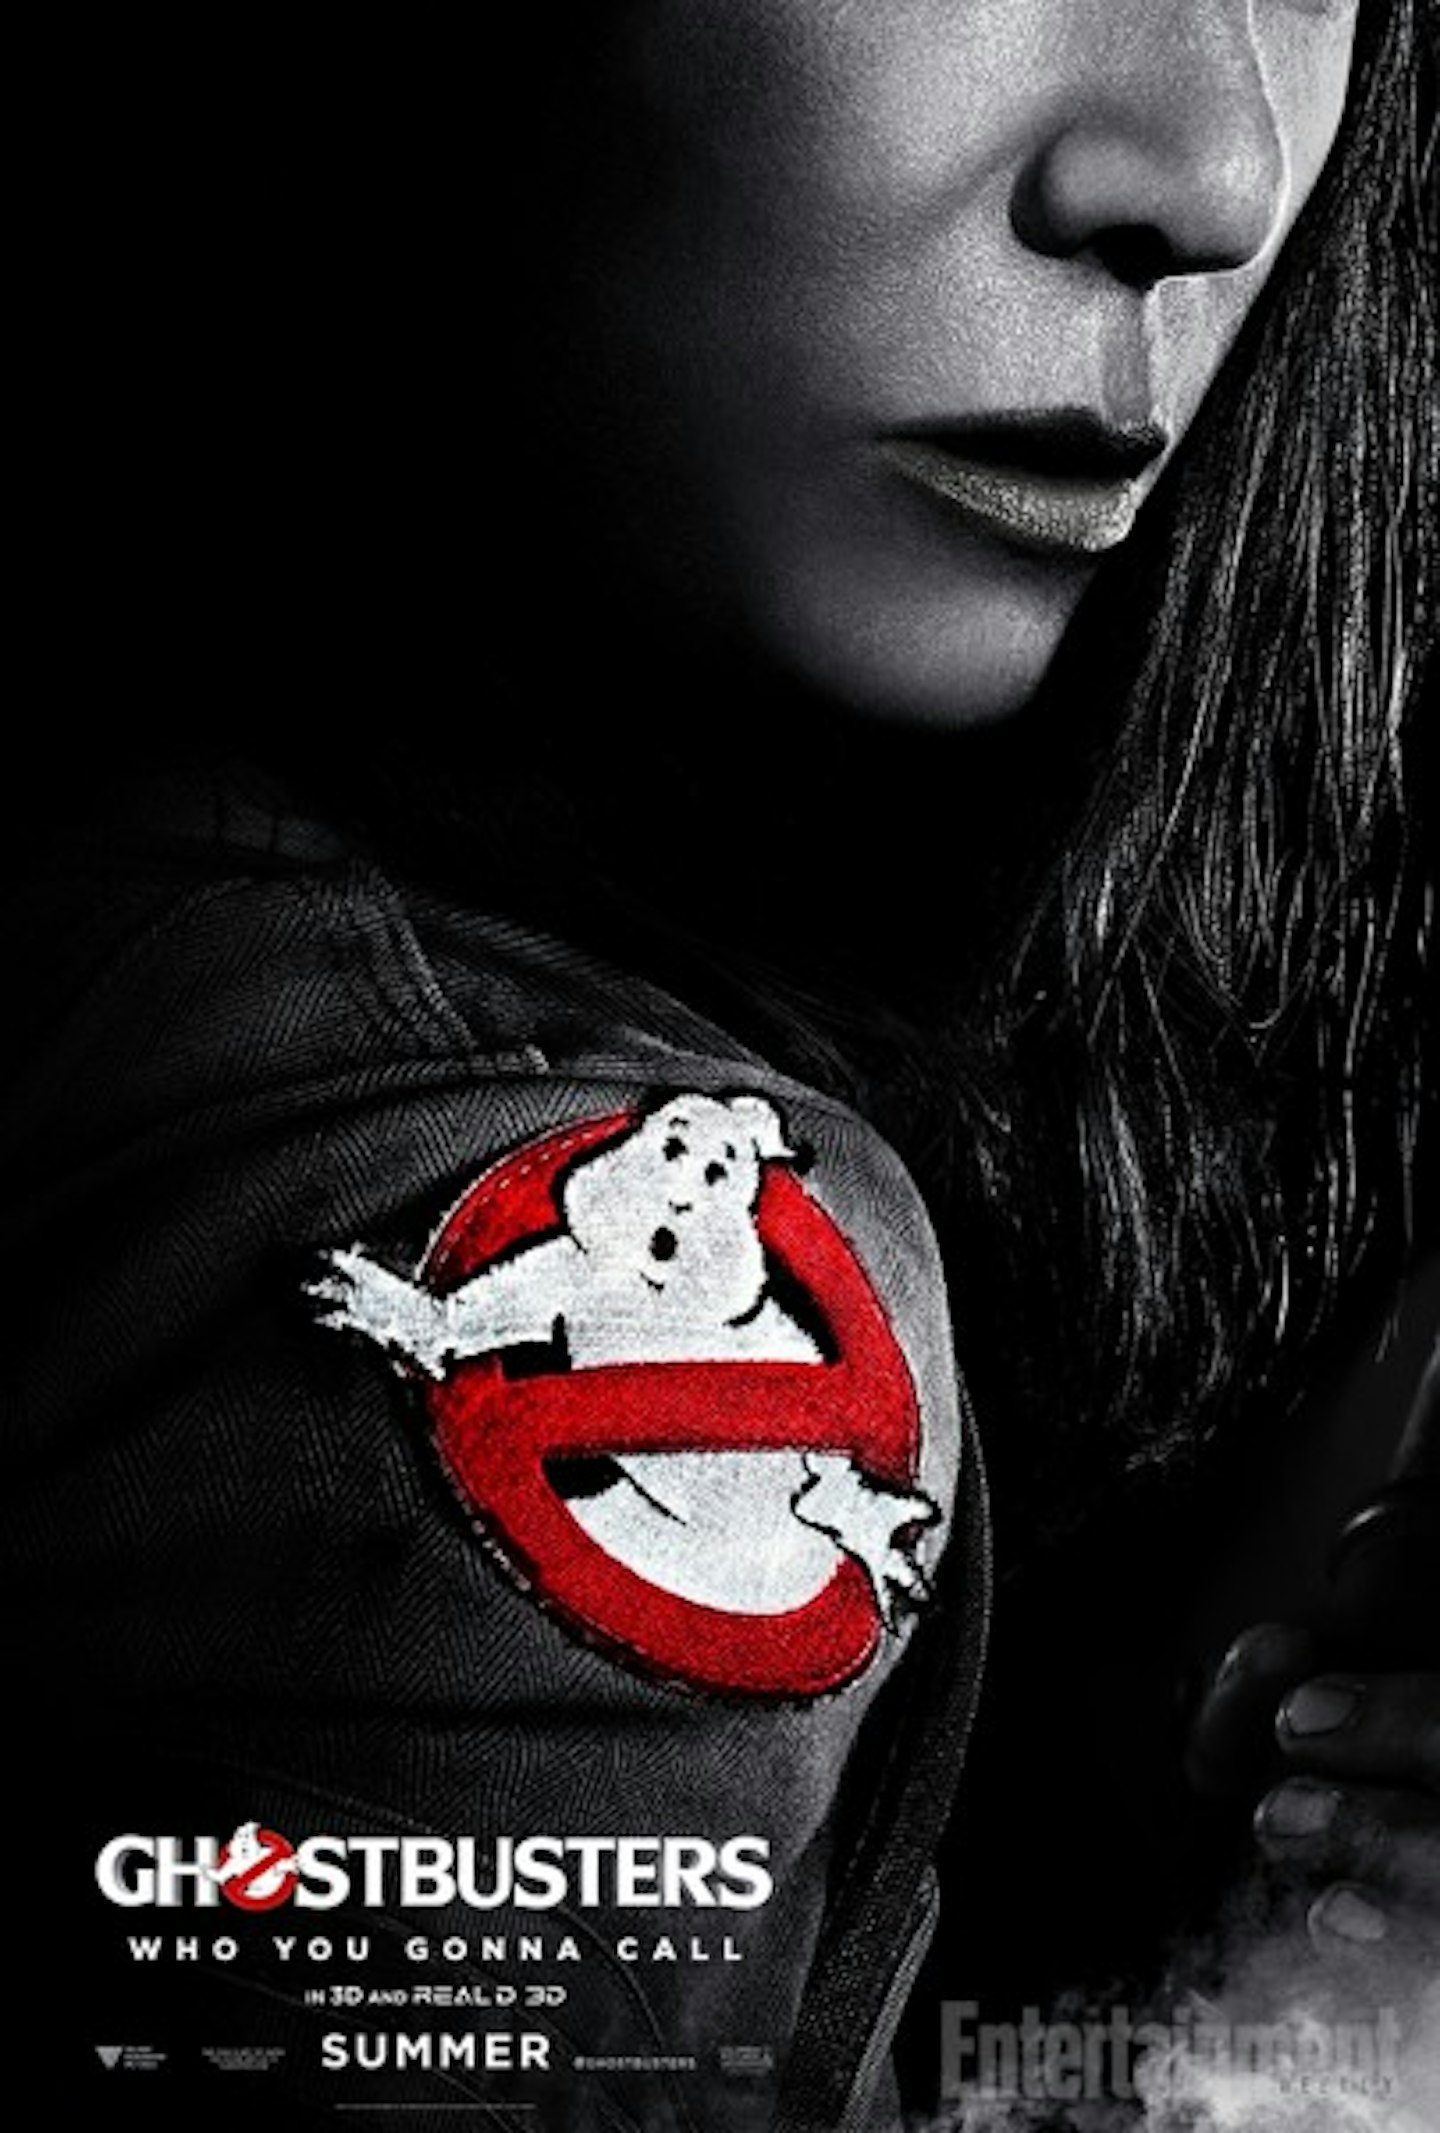 Ghostbusters poster - Kristen Wiig